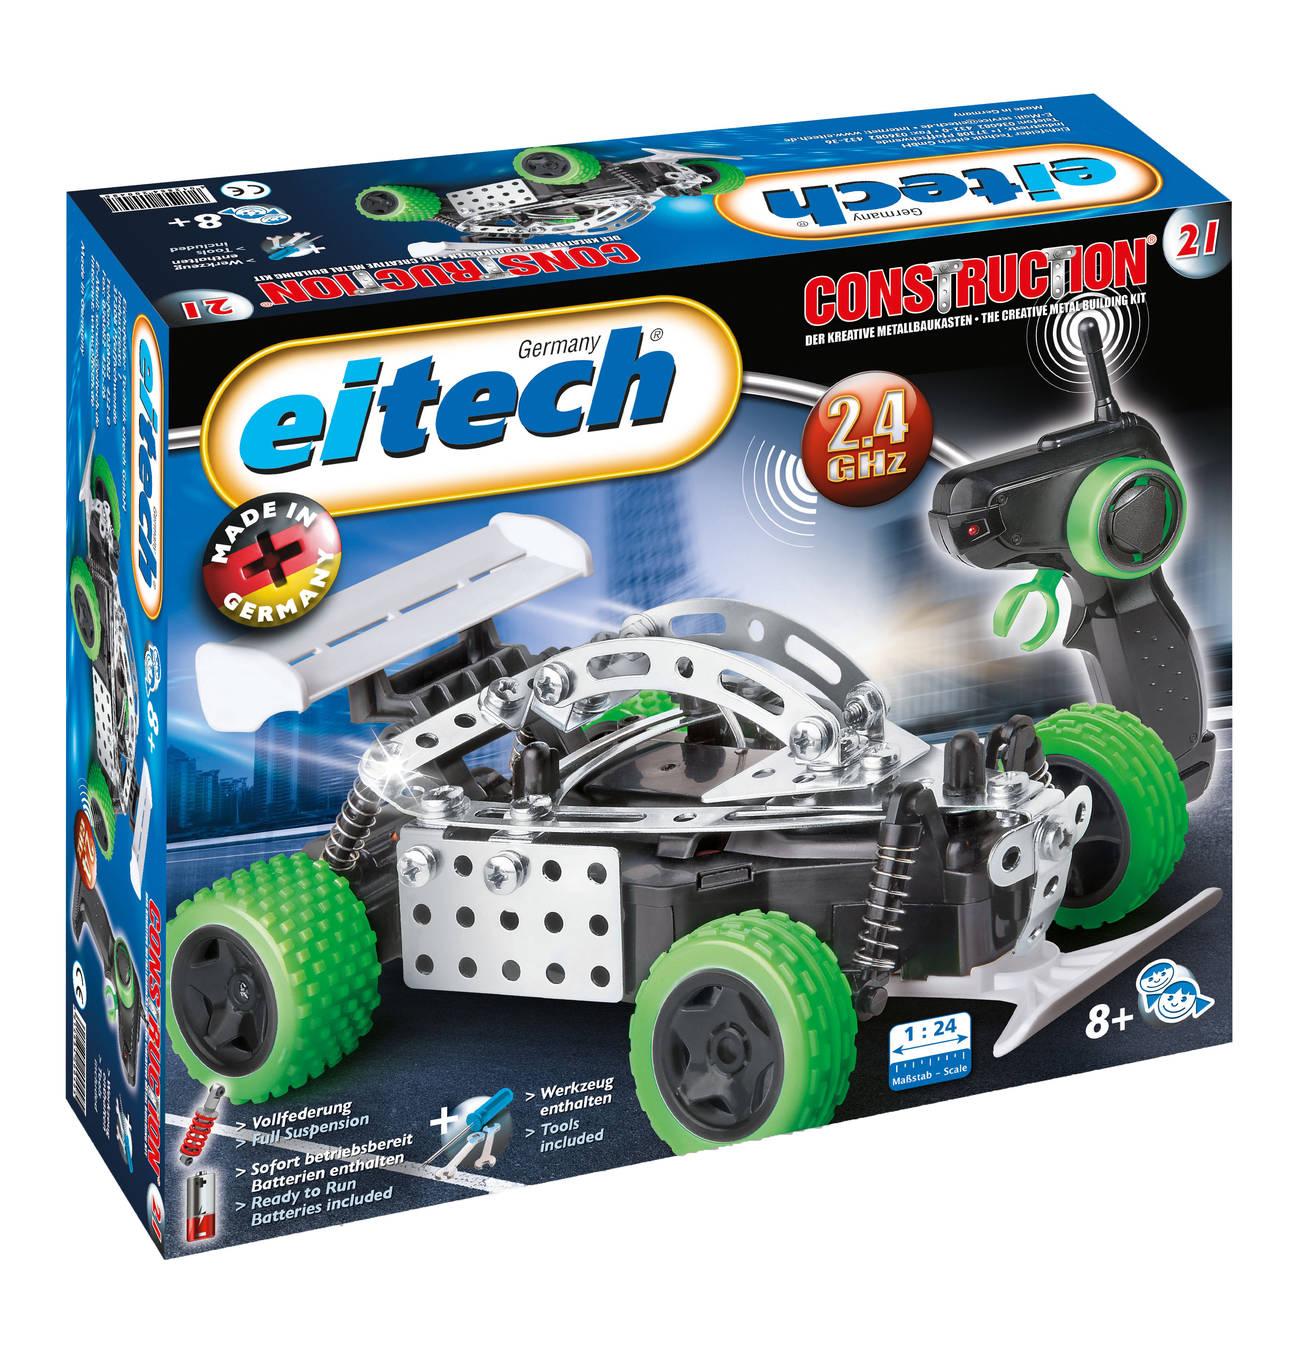 EITECH RC SPEED RACER 2.4G C 21